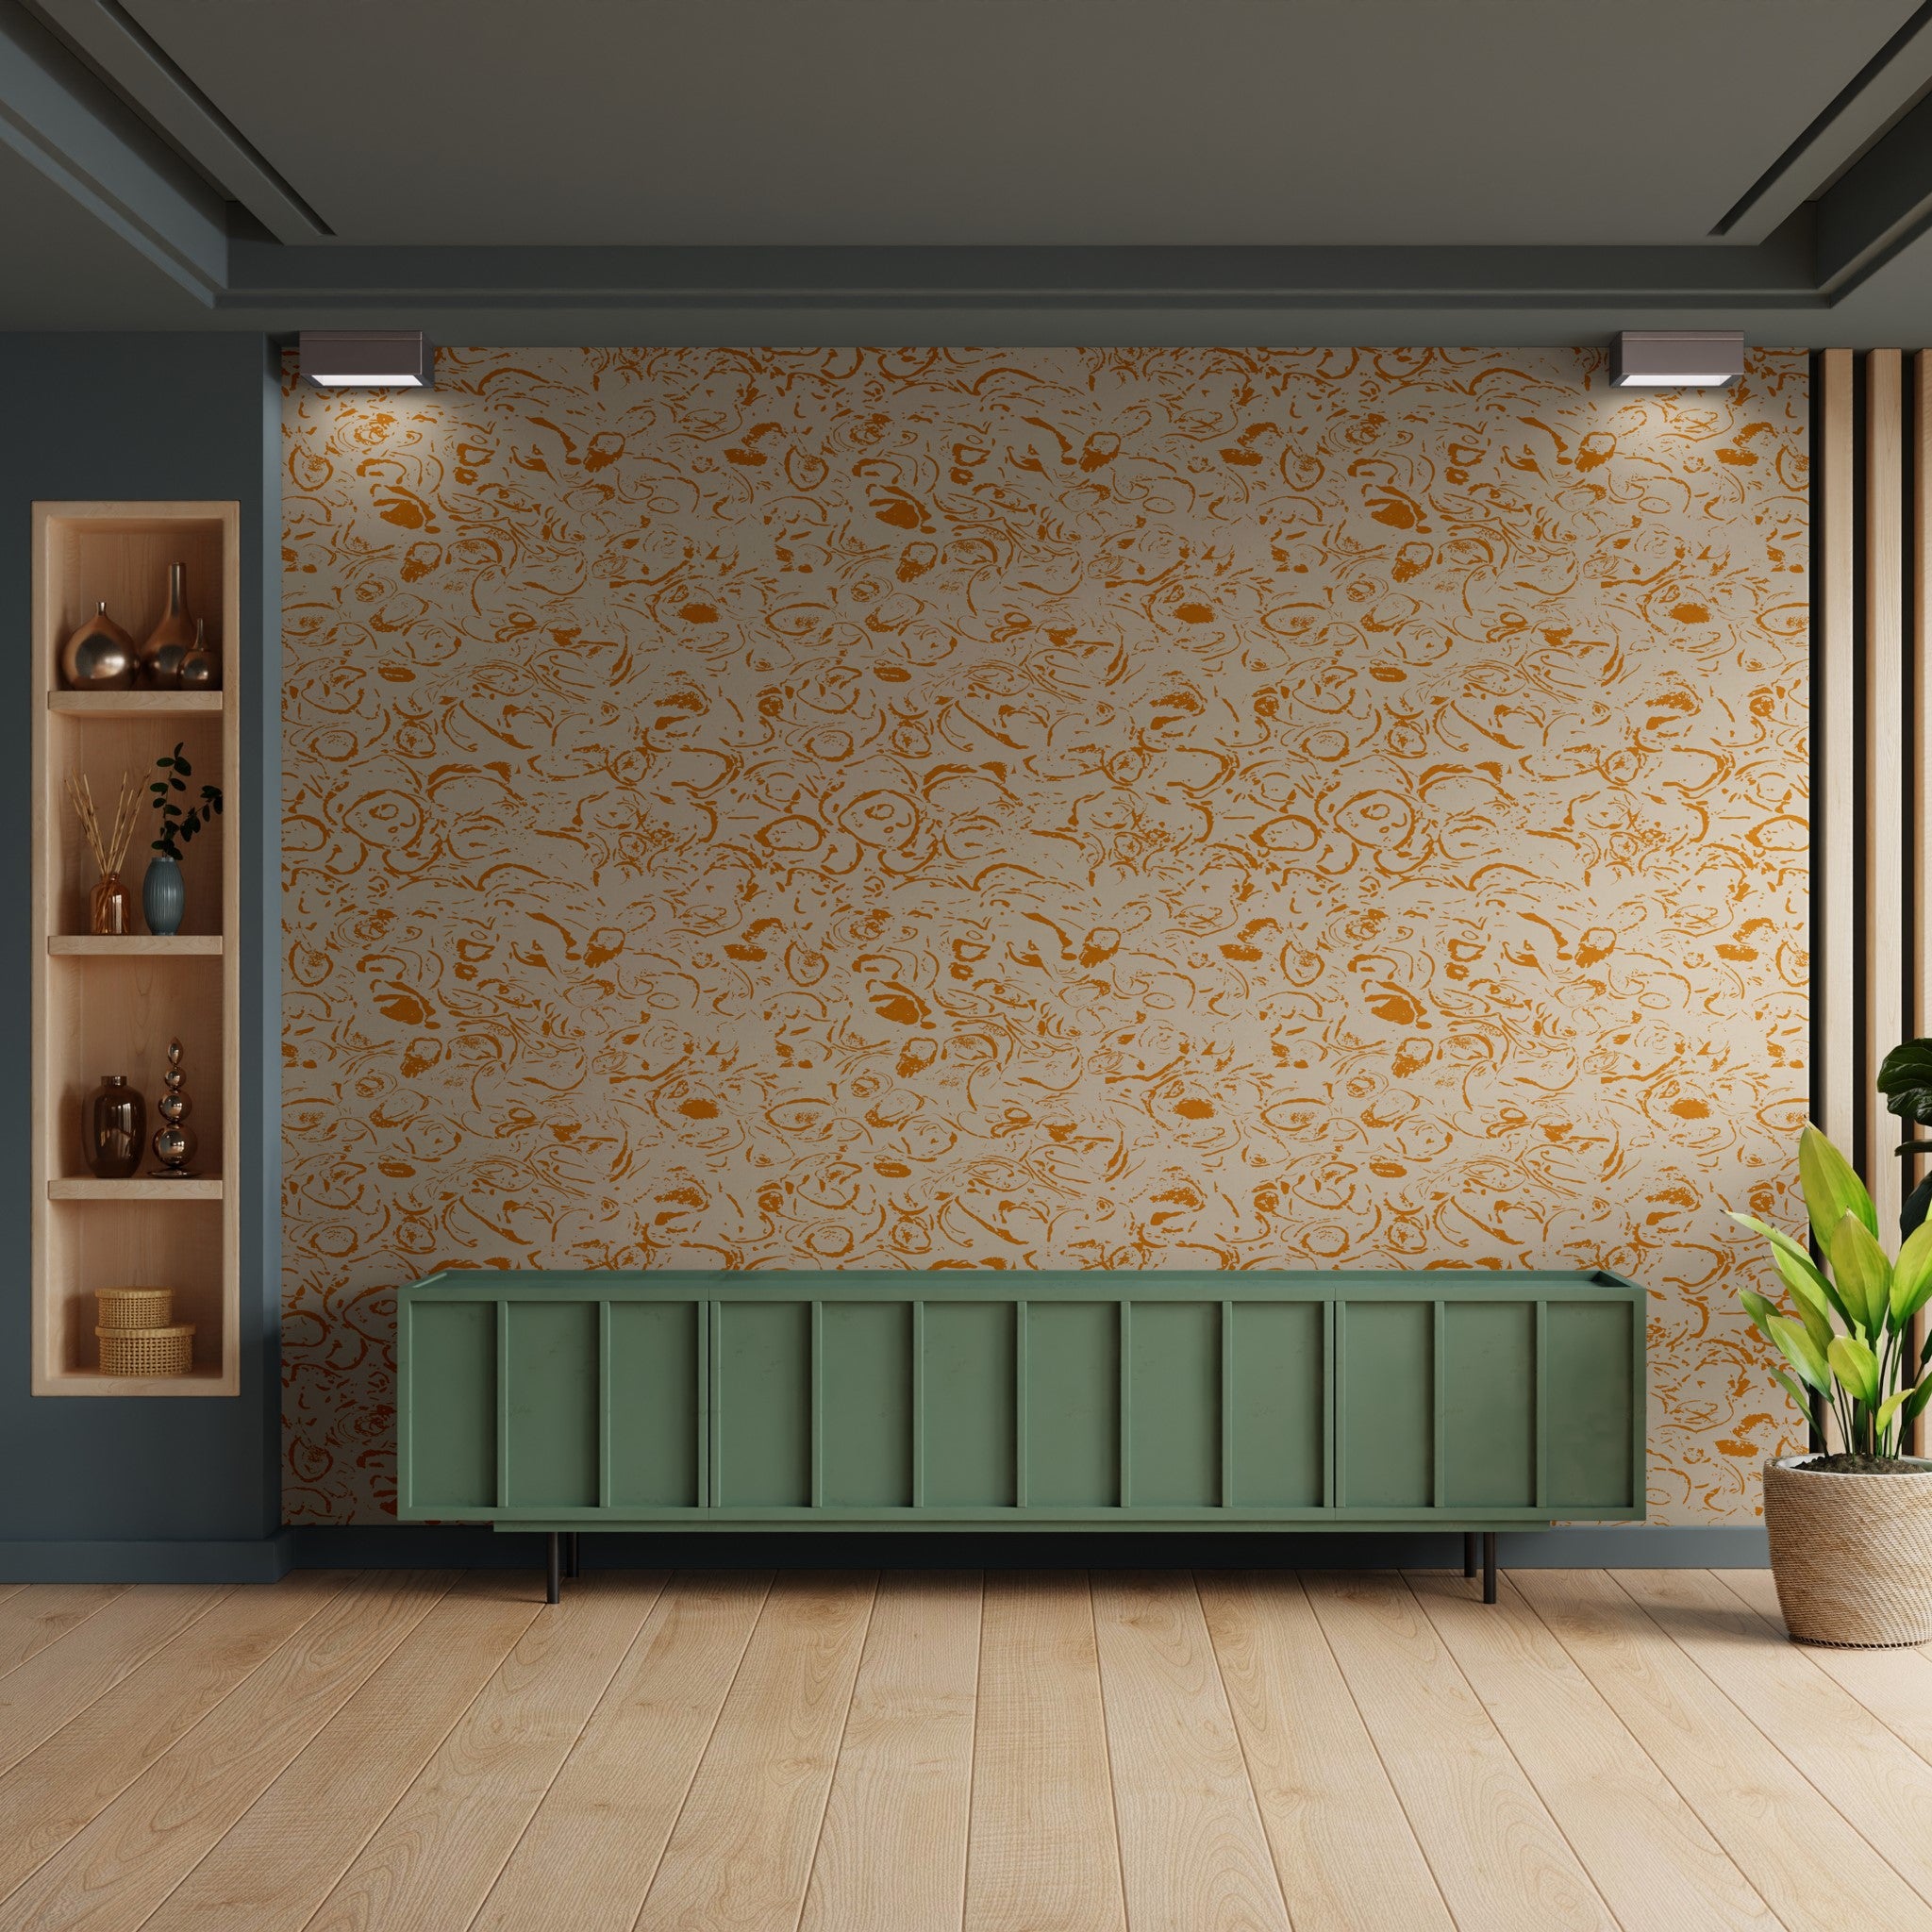 "Ranger Wallpaper by Wall Blush in a modern living room emphasizing elegant wall decor."